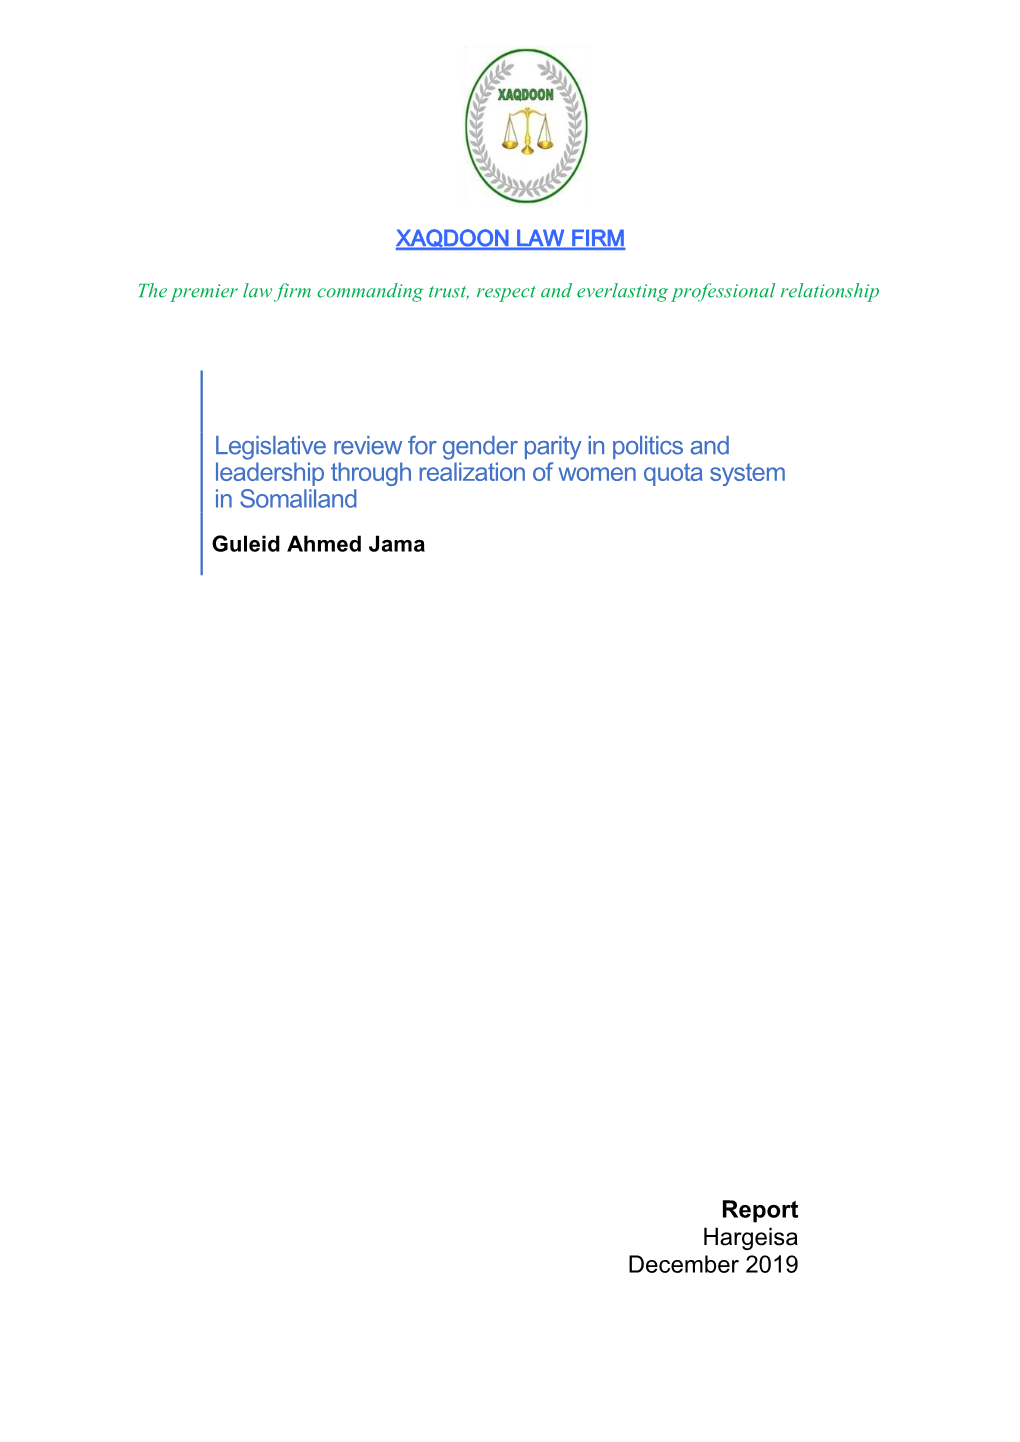 Legislative Review on Gender Parity in Somaliland